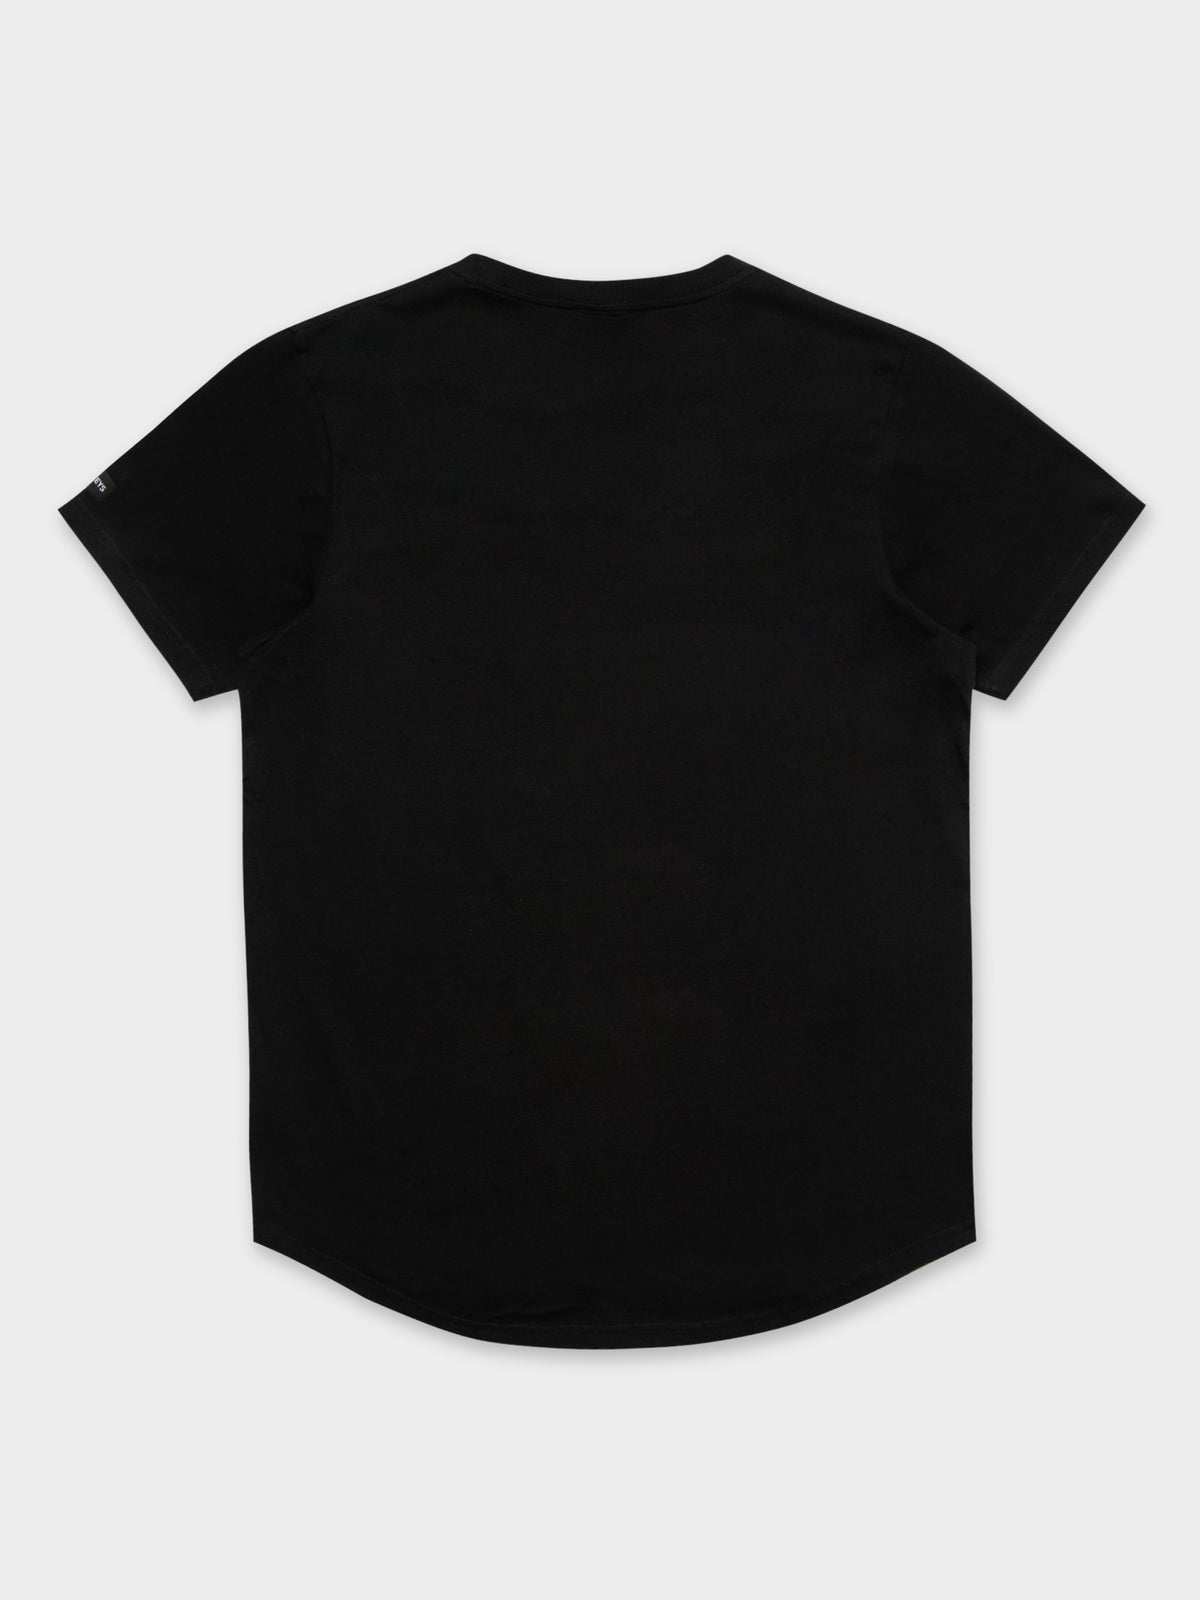 Fender Loose T-Shirt in Black